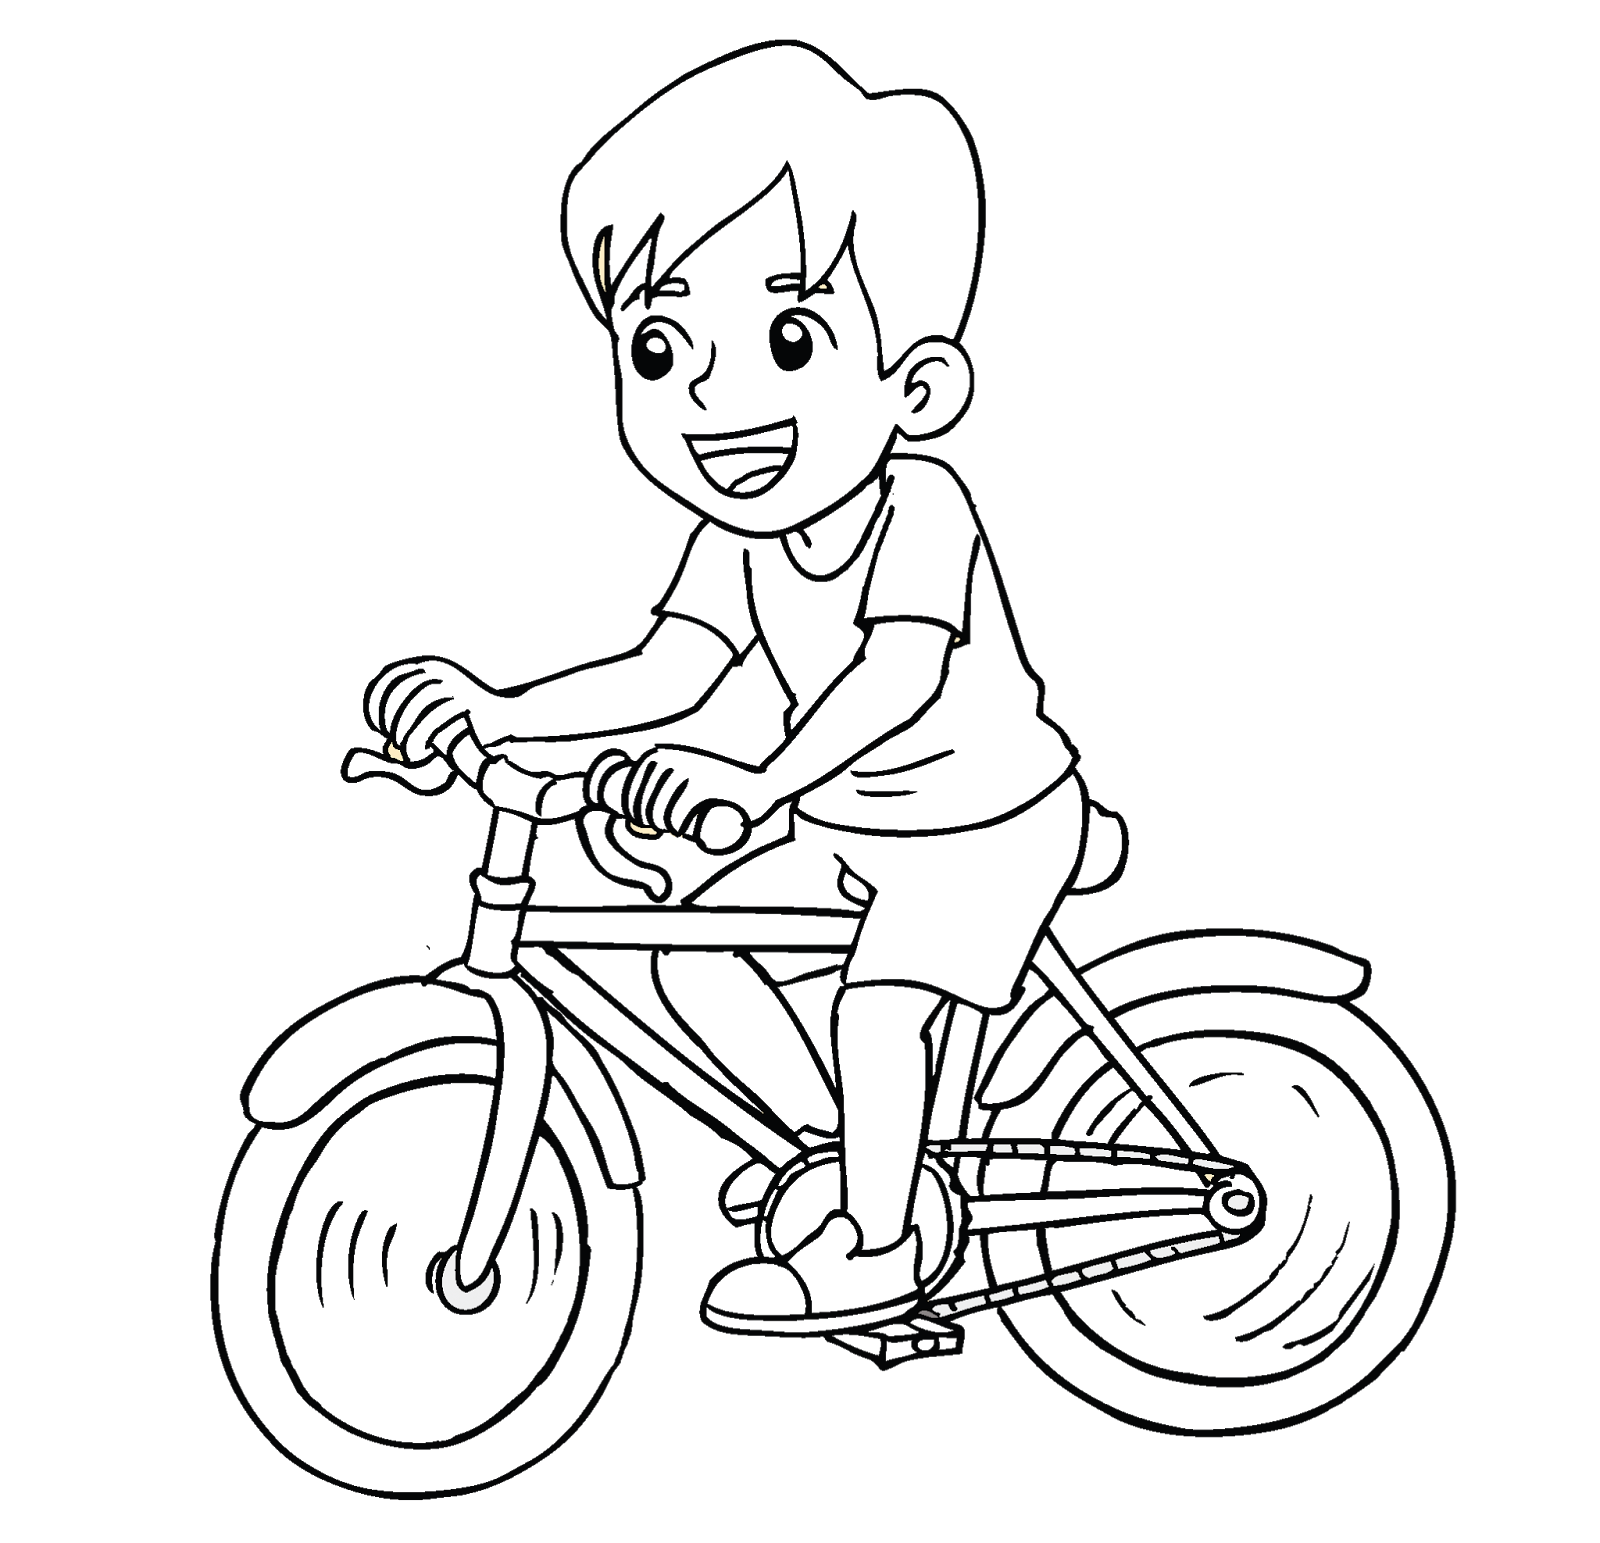 Мальчик на велосипеде картинки: D0 bc d0 b0 d0 bb d1 8c d1 87 d0 b8 d0